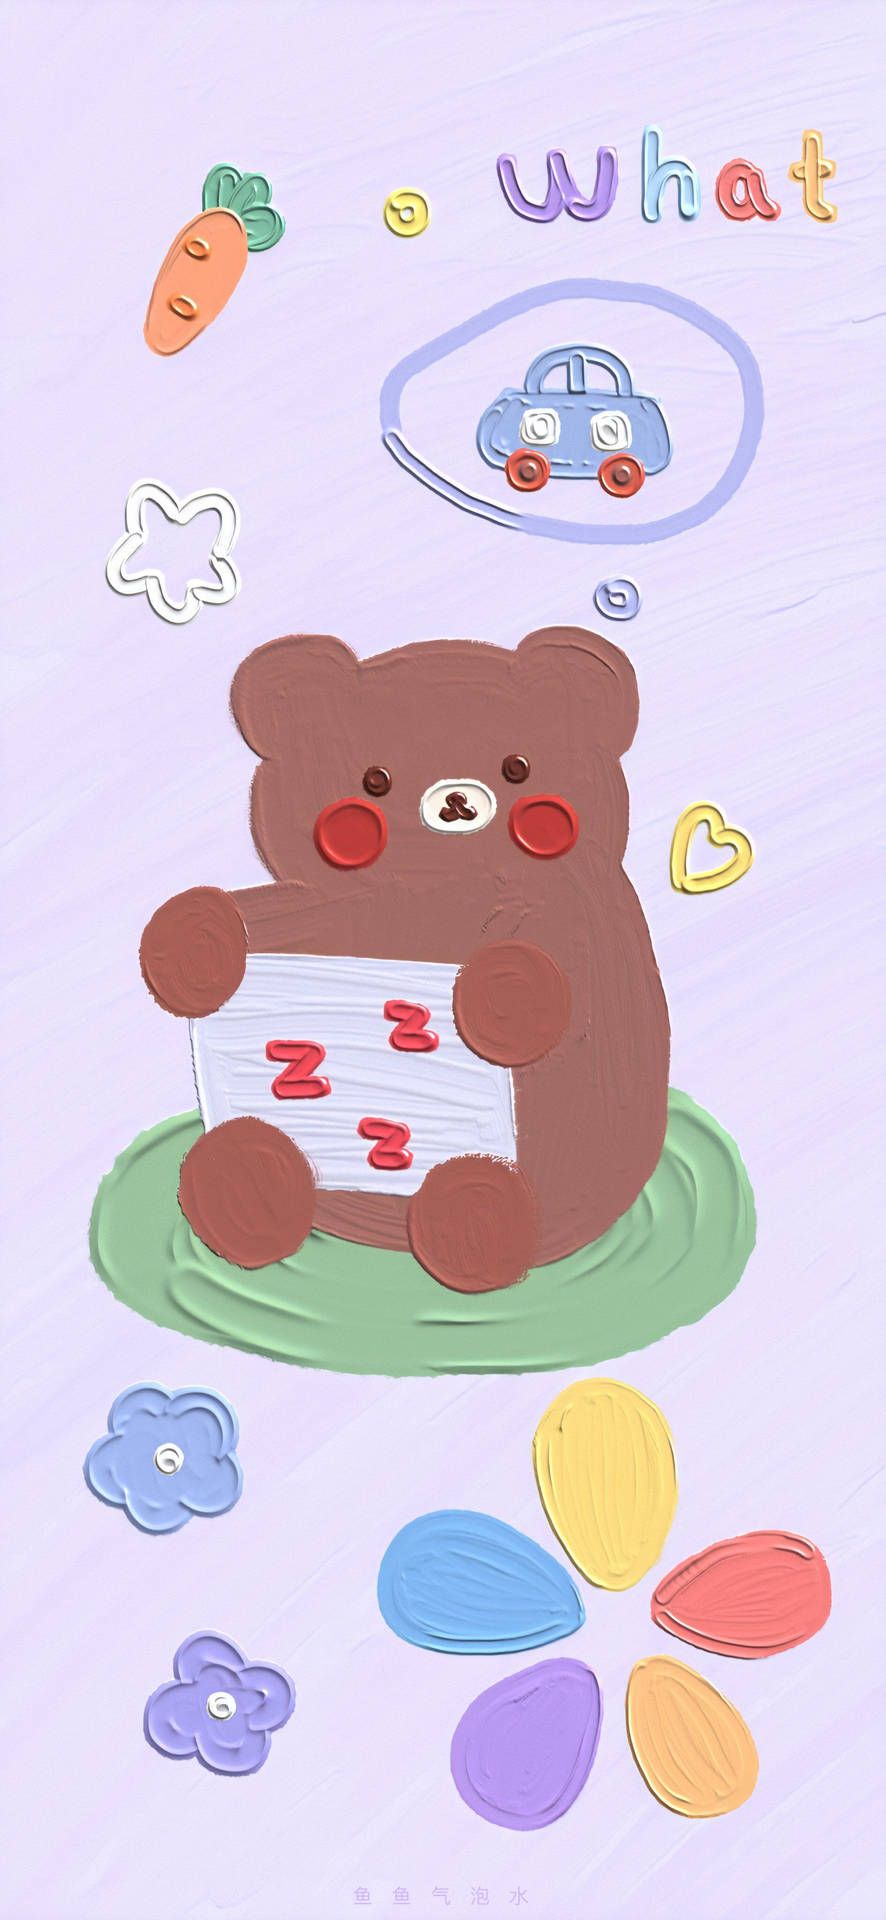 Free Cute Bear Wallpaper Downloads, Cute Bear Wallpaper for FREE